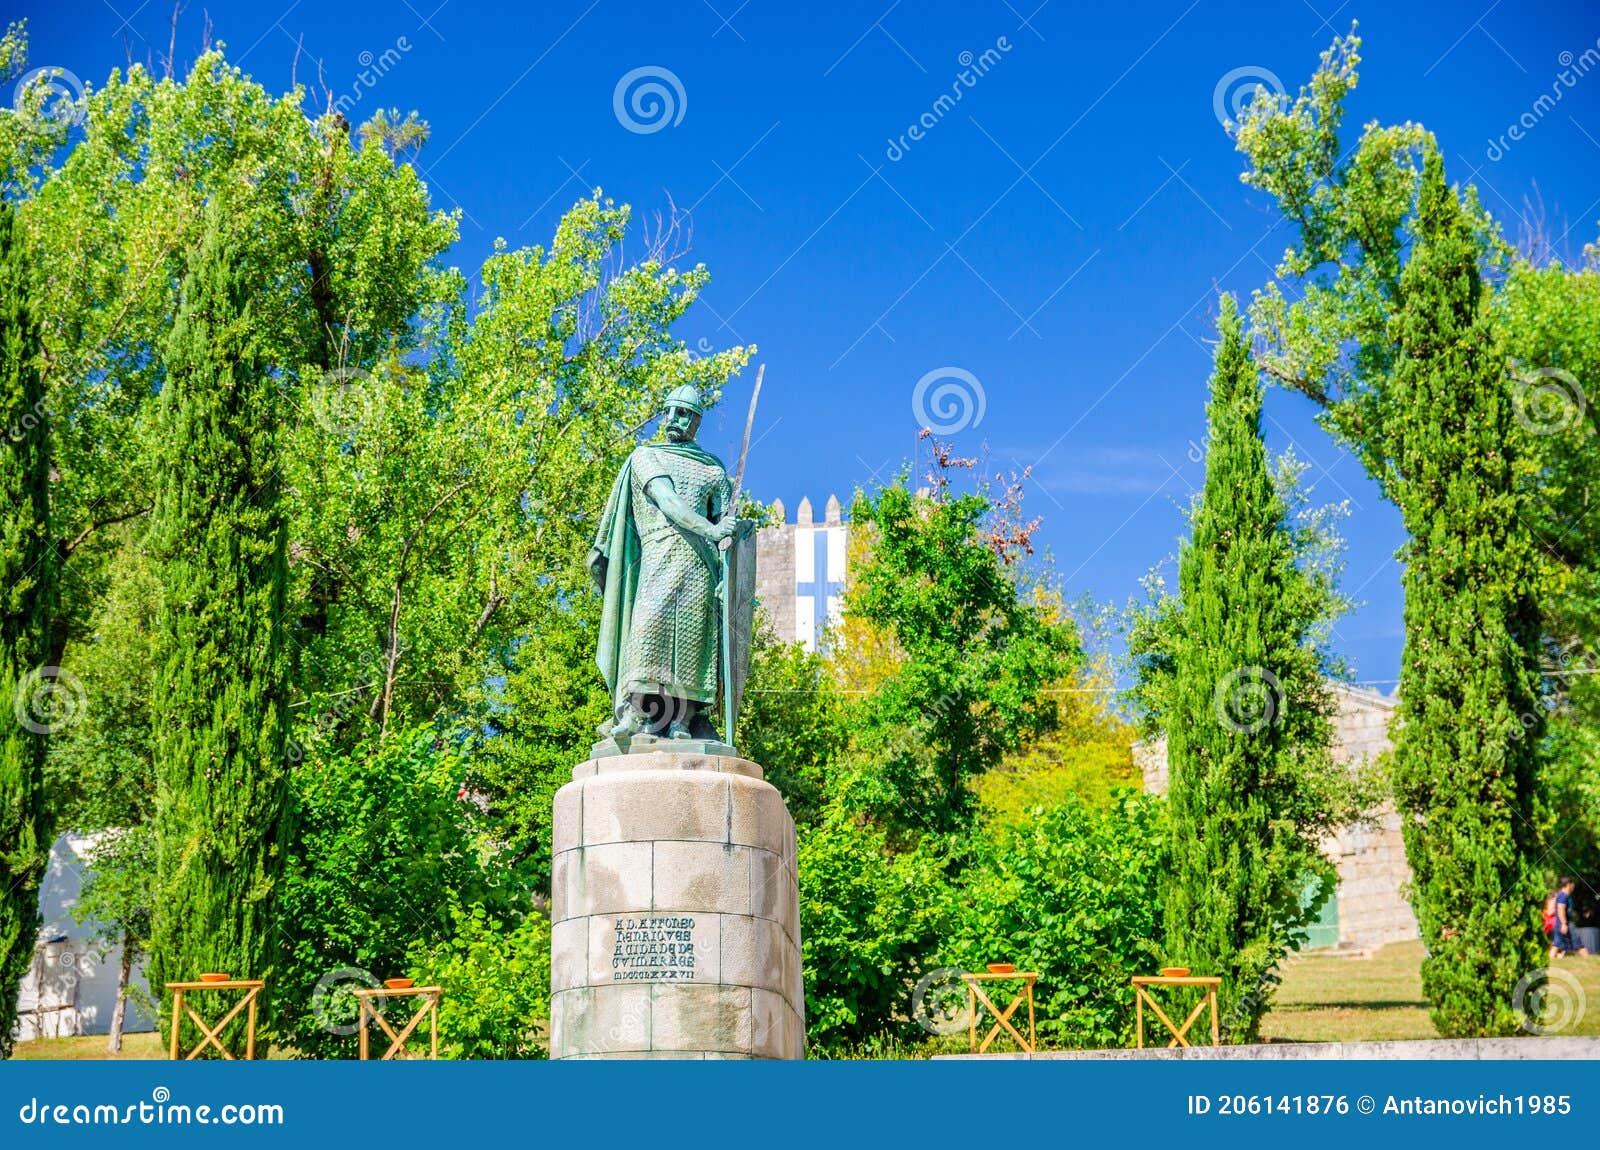 dom afonso henriques estatua statue, monument of portugal first king with castle of guimaraes